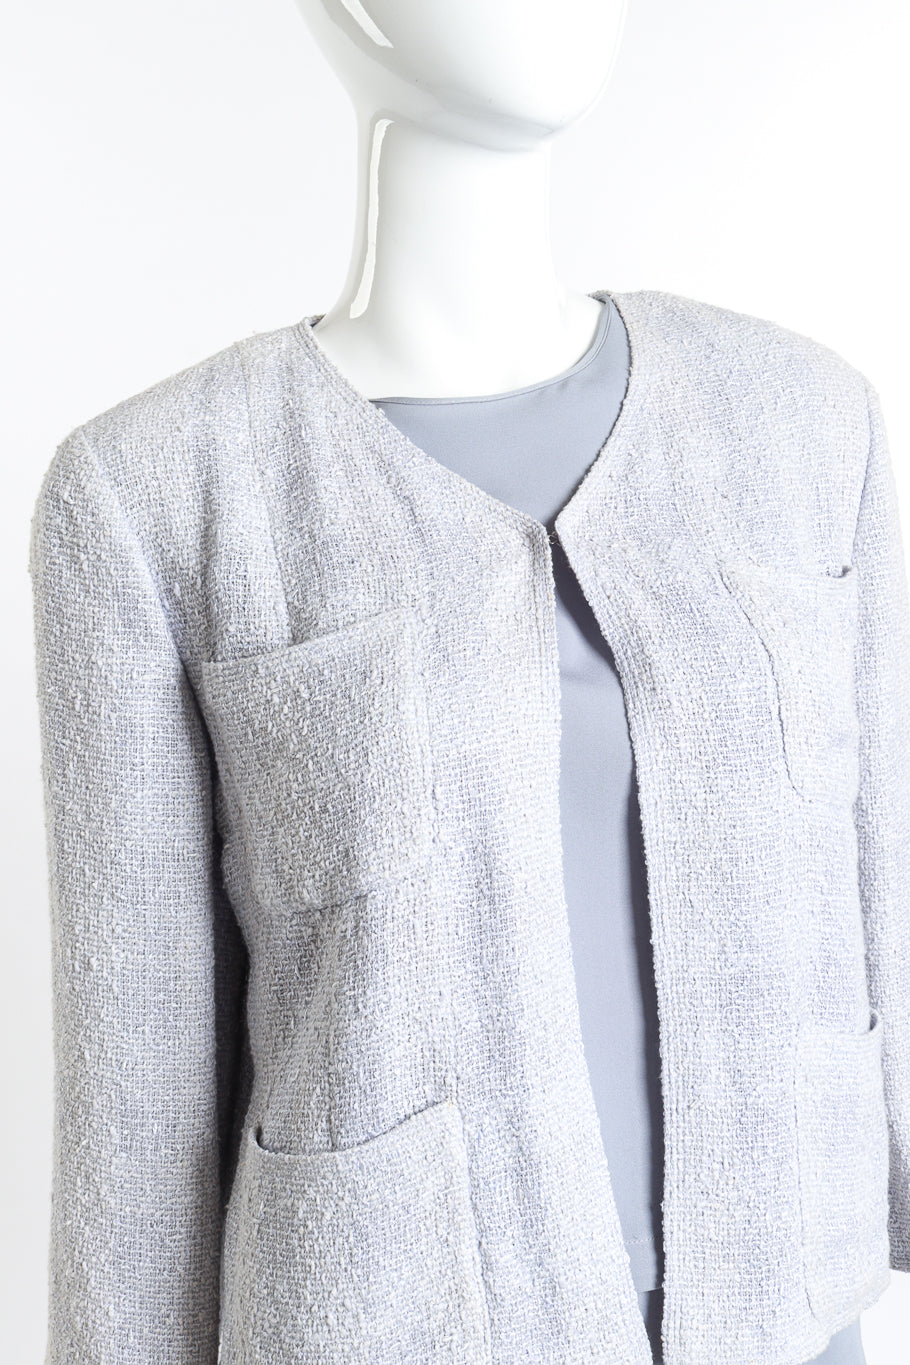 Chanel Boucle Jacket Three Piece Set jacket detail on mannequin @RECESS LA